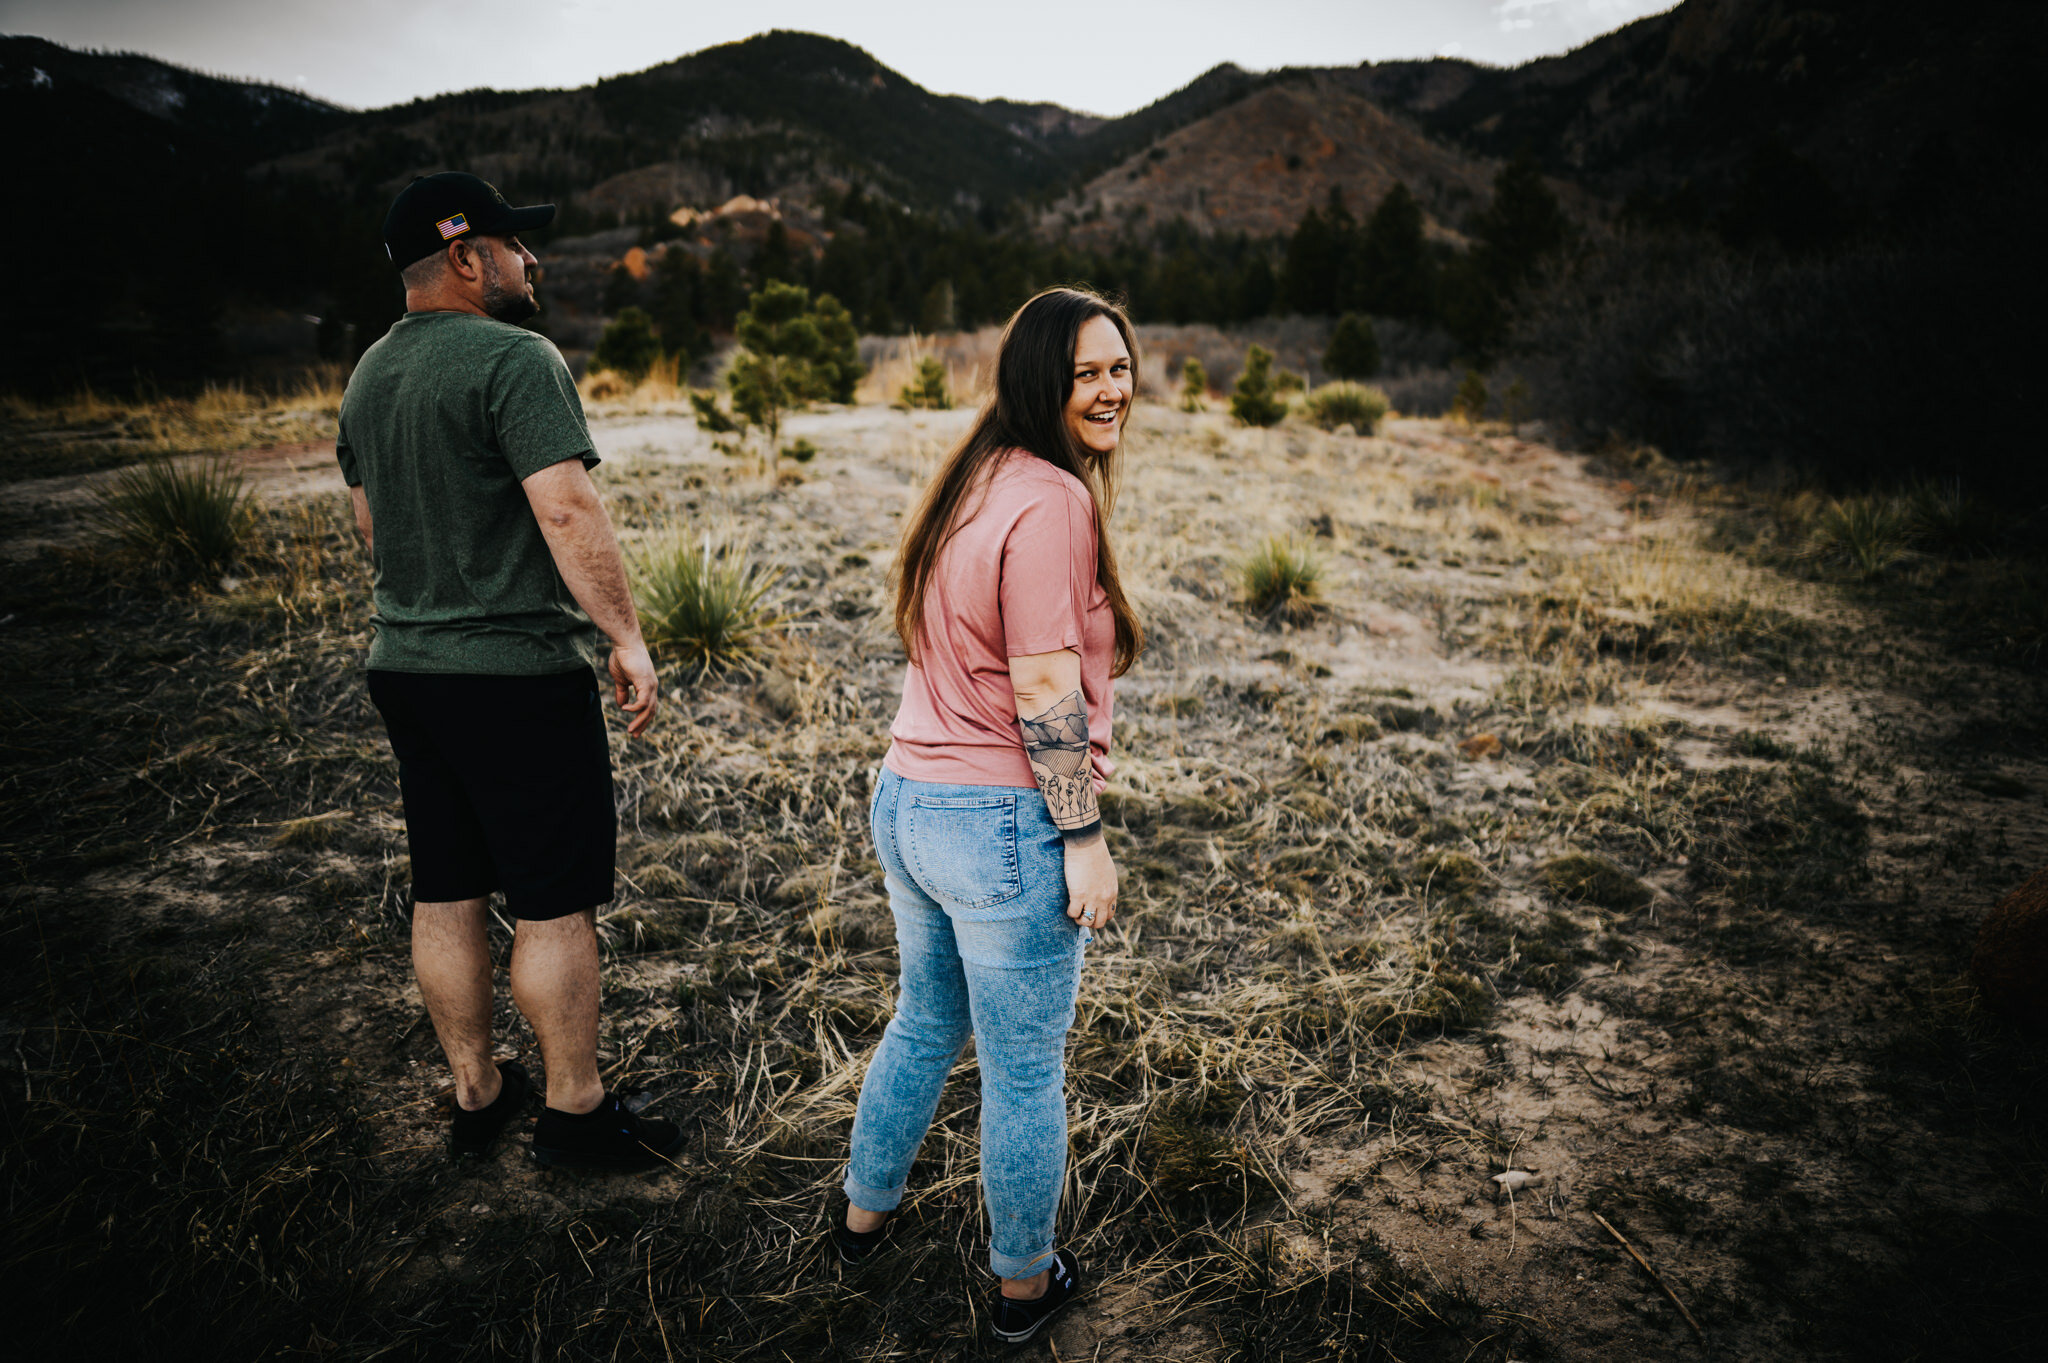 Danielle McVey Family Session Colorado Springs Photographer Sunset Mountains Wild Prairie Photography-16-2020.jpg